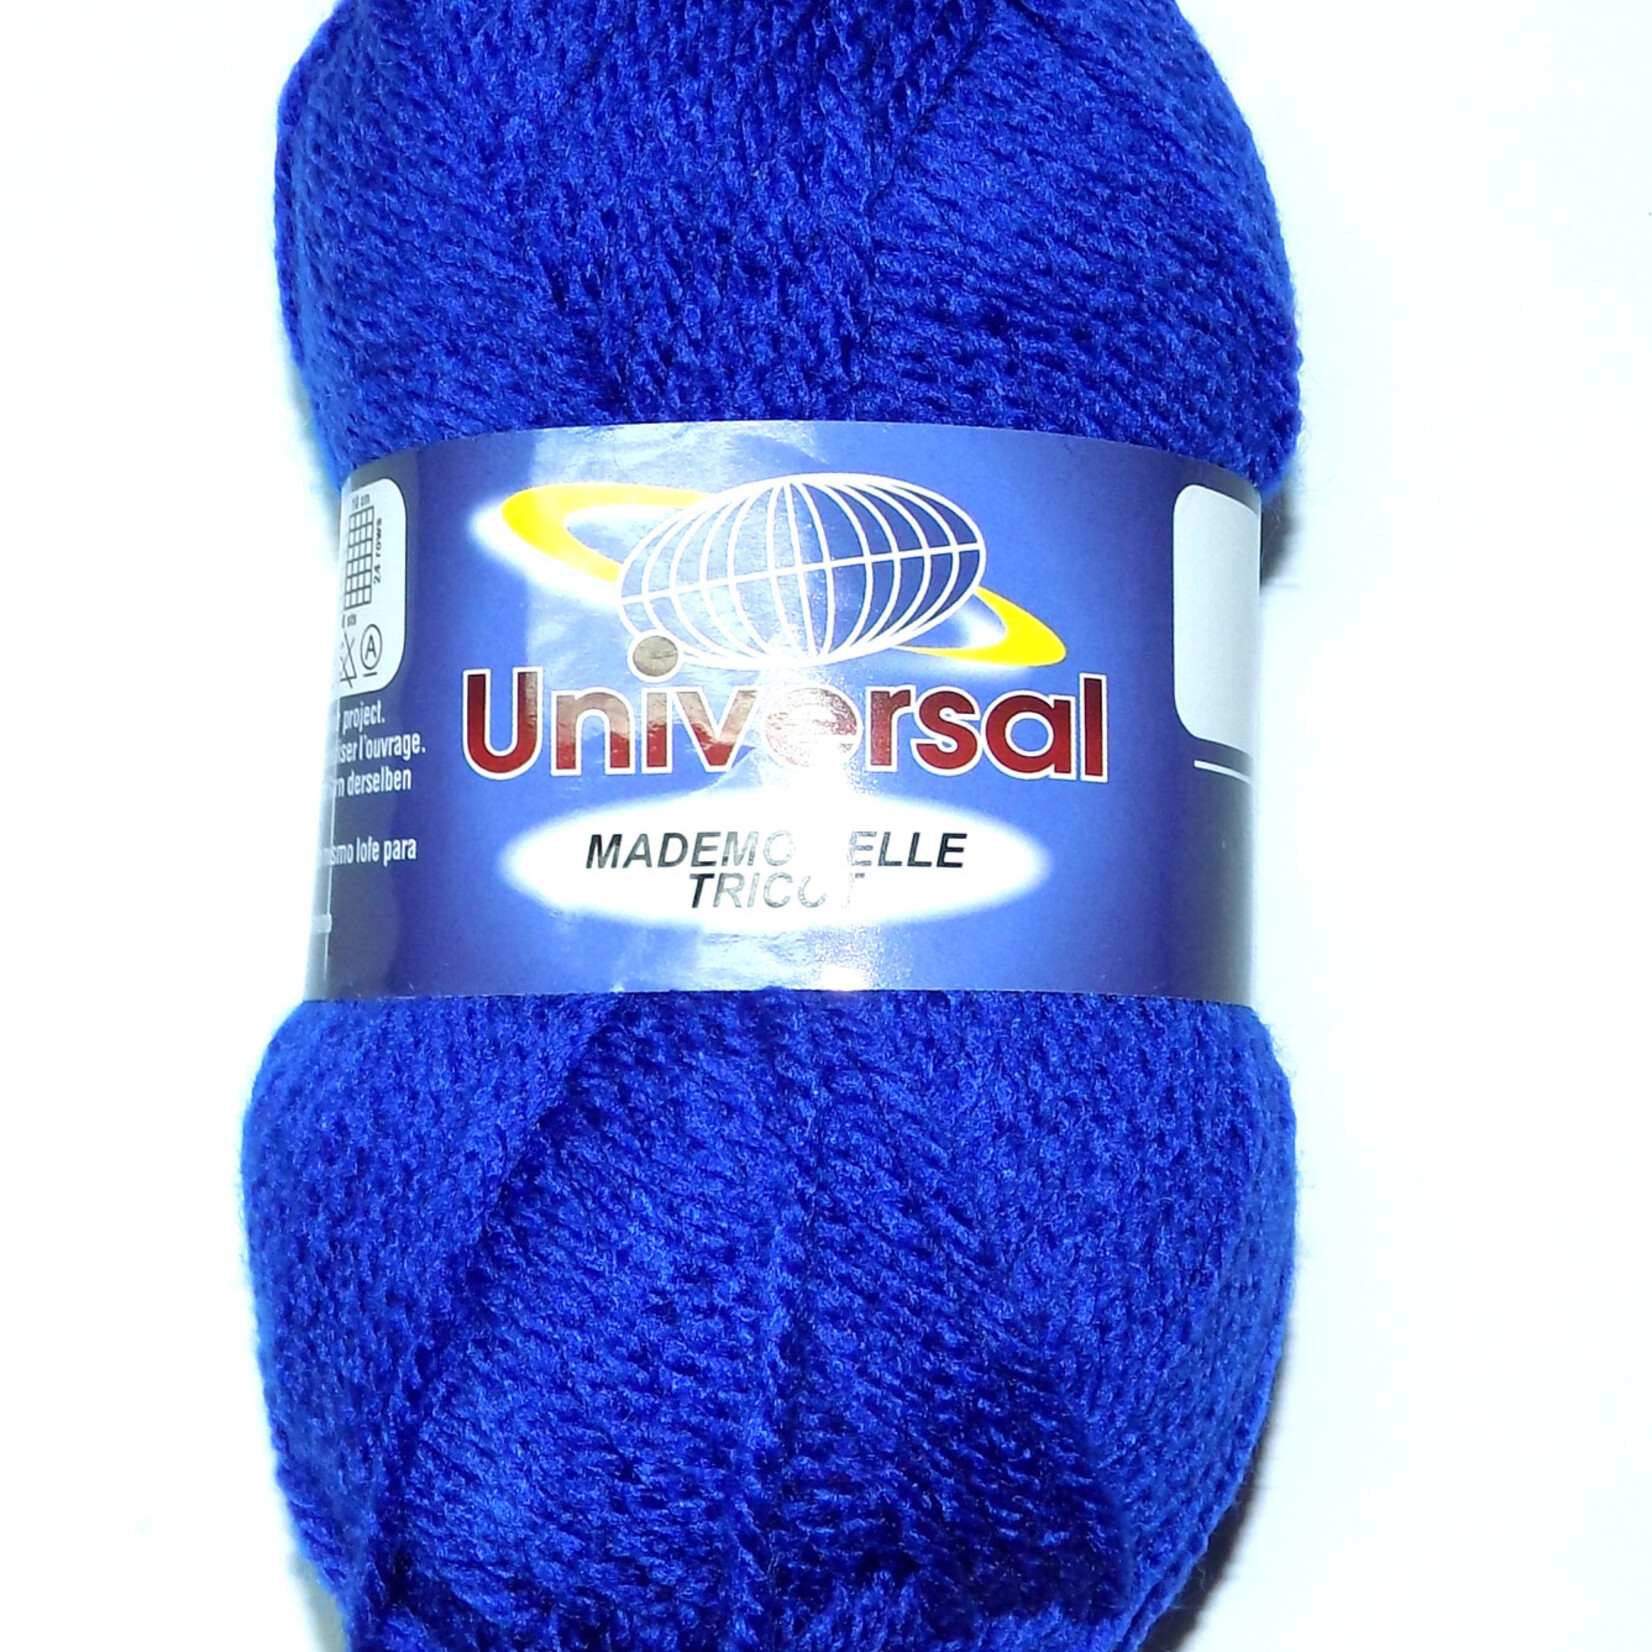 Universal Mademoiselle Tricot Wool 50 grams Royal Blue